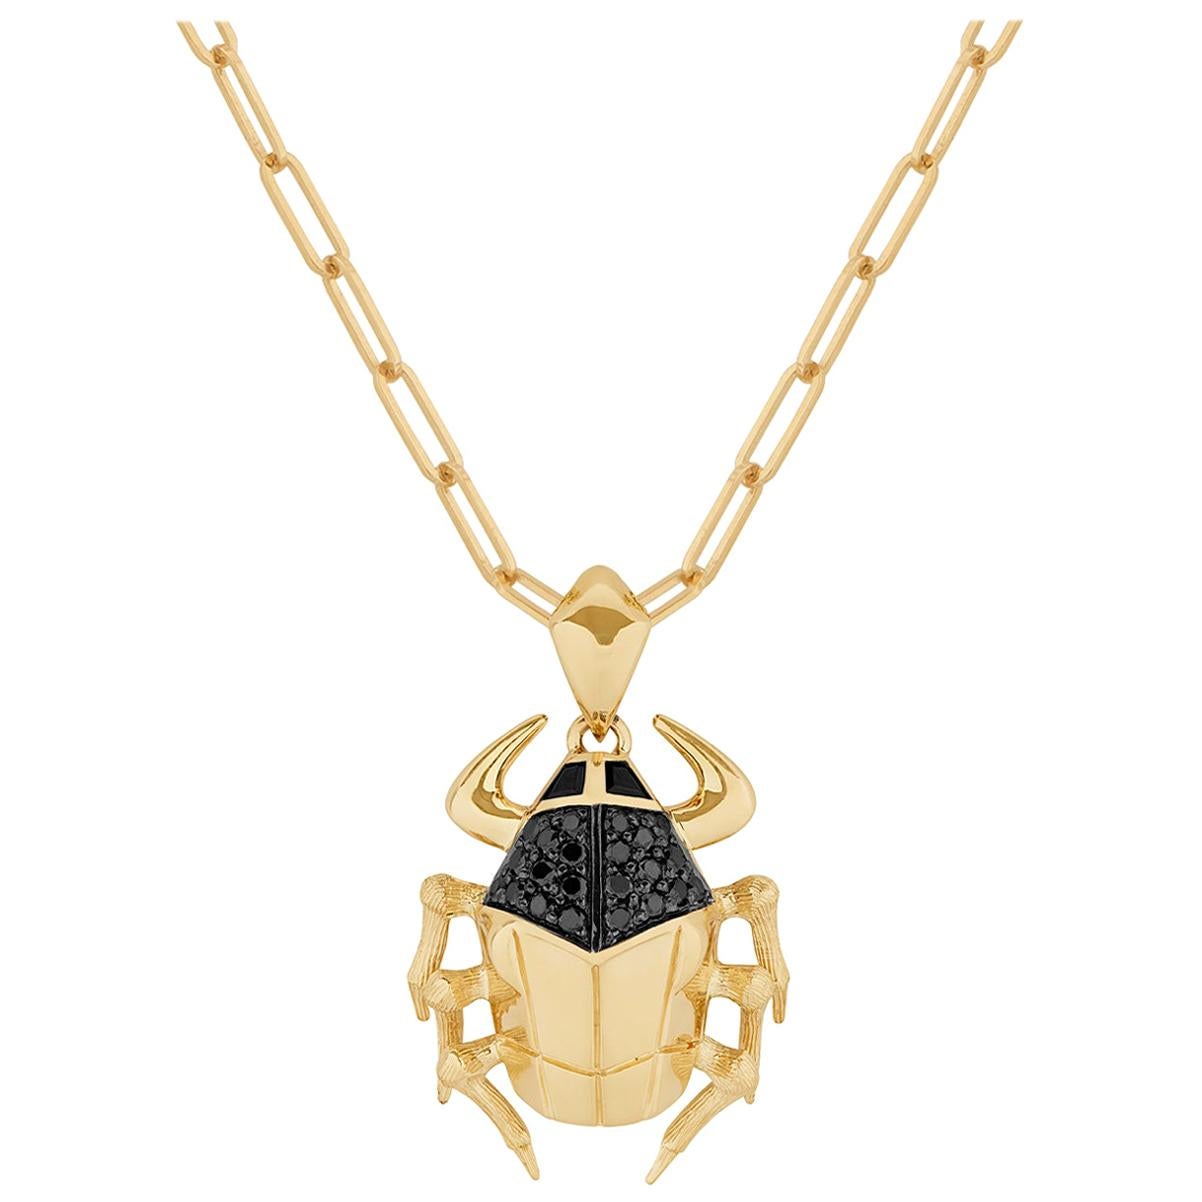 Stephen Webster Pendentif Jitterbug Toro Beetle en or 18 carats et diamants noirs